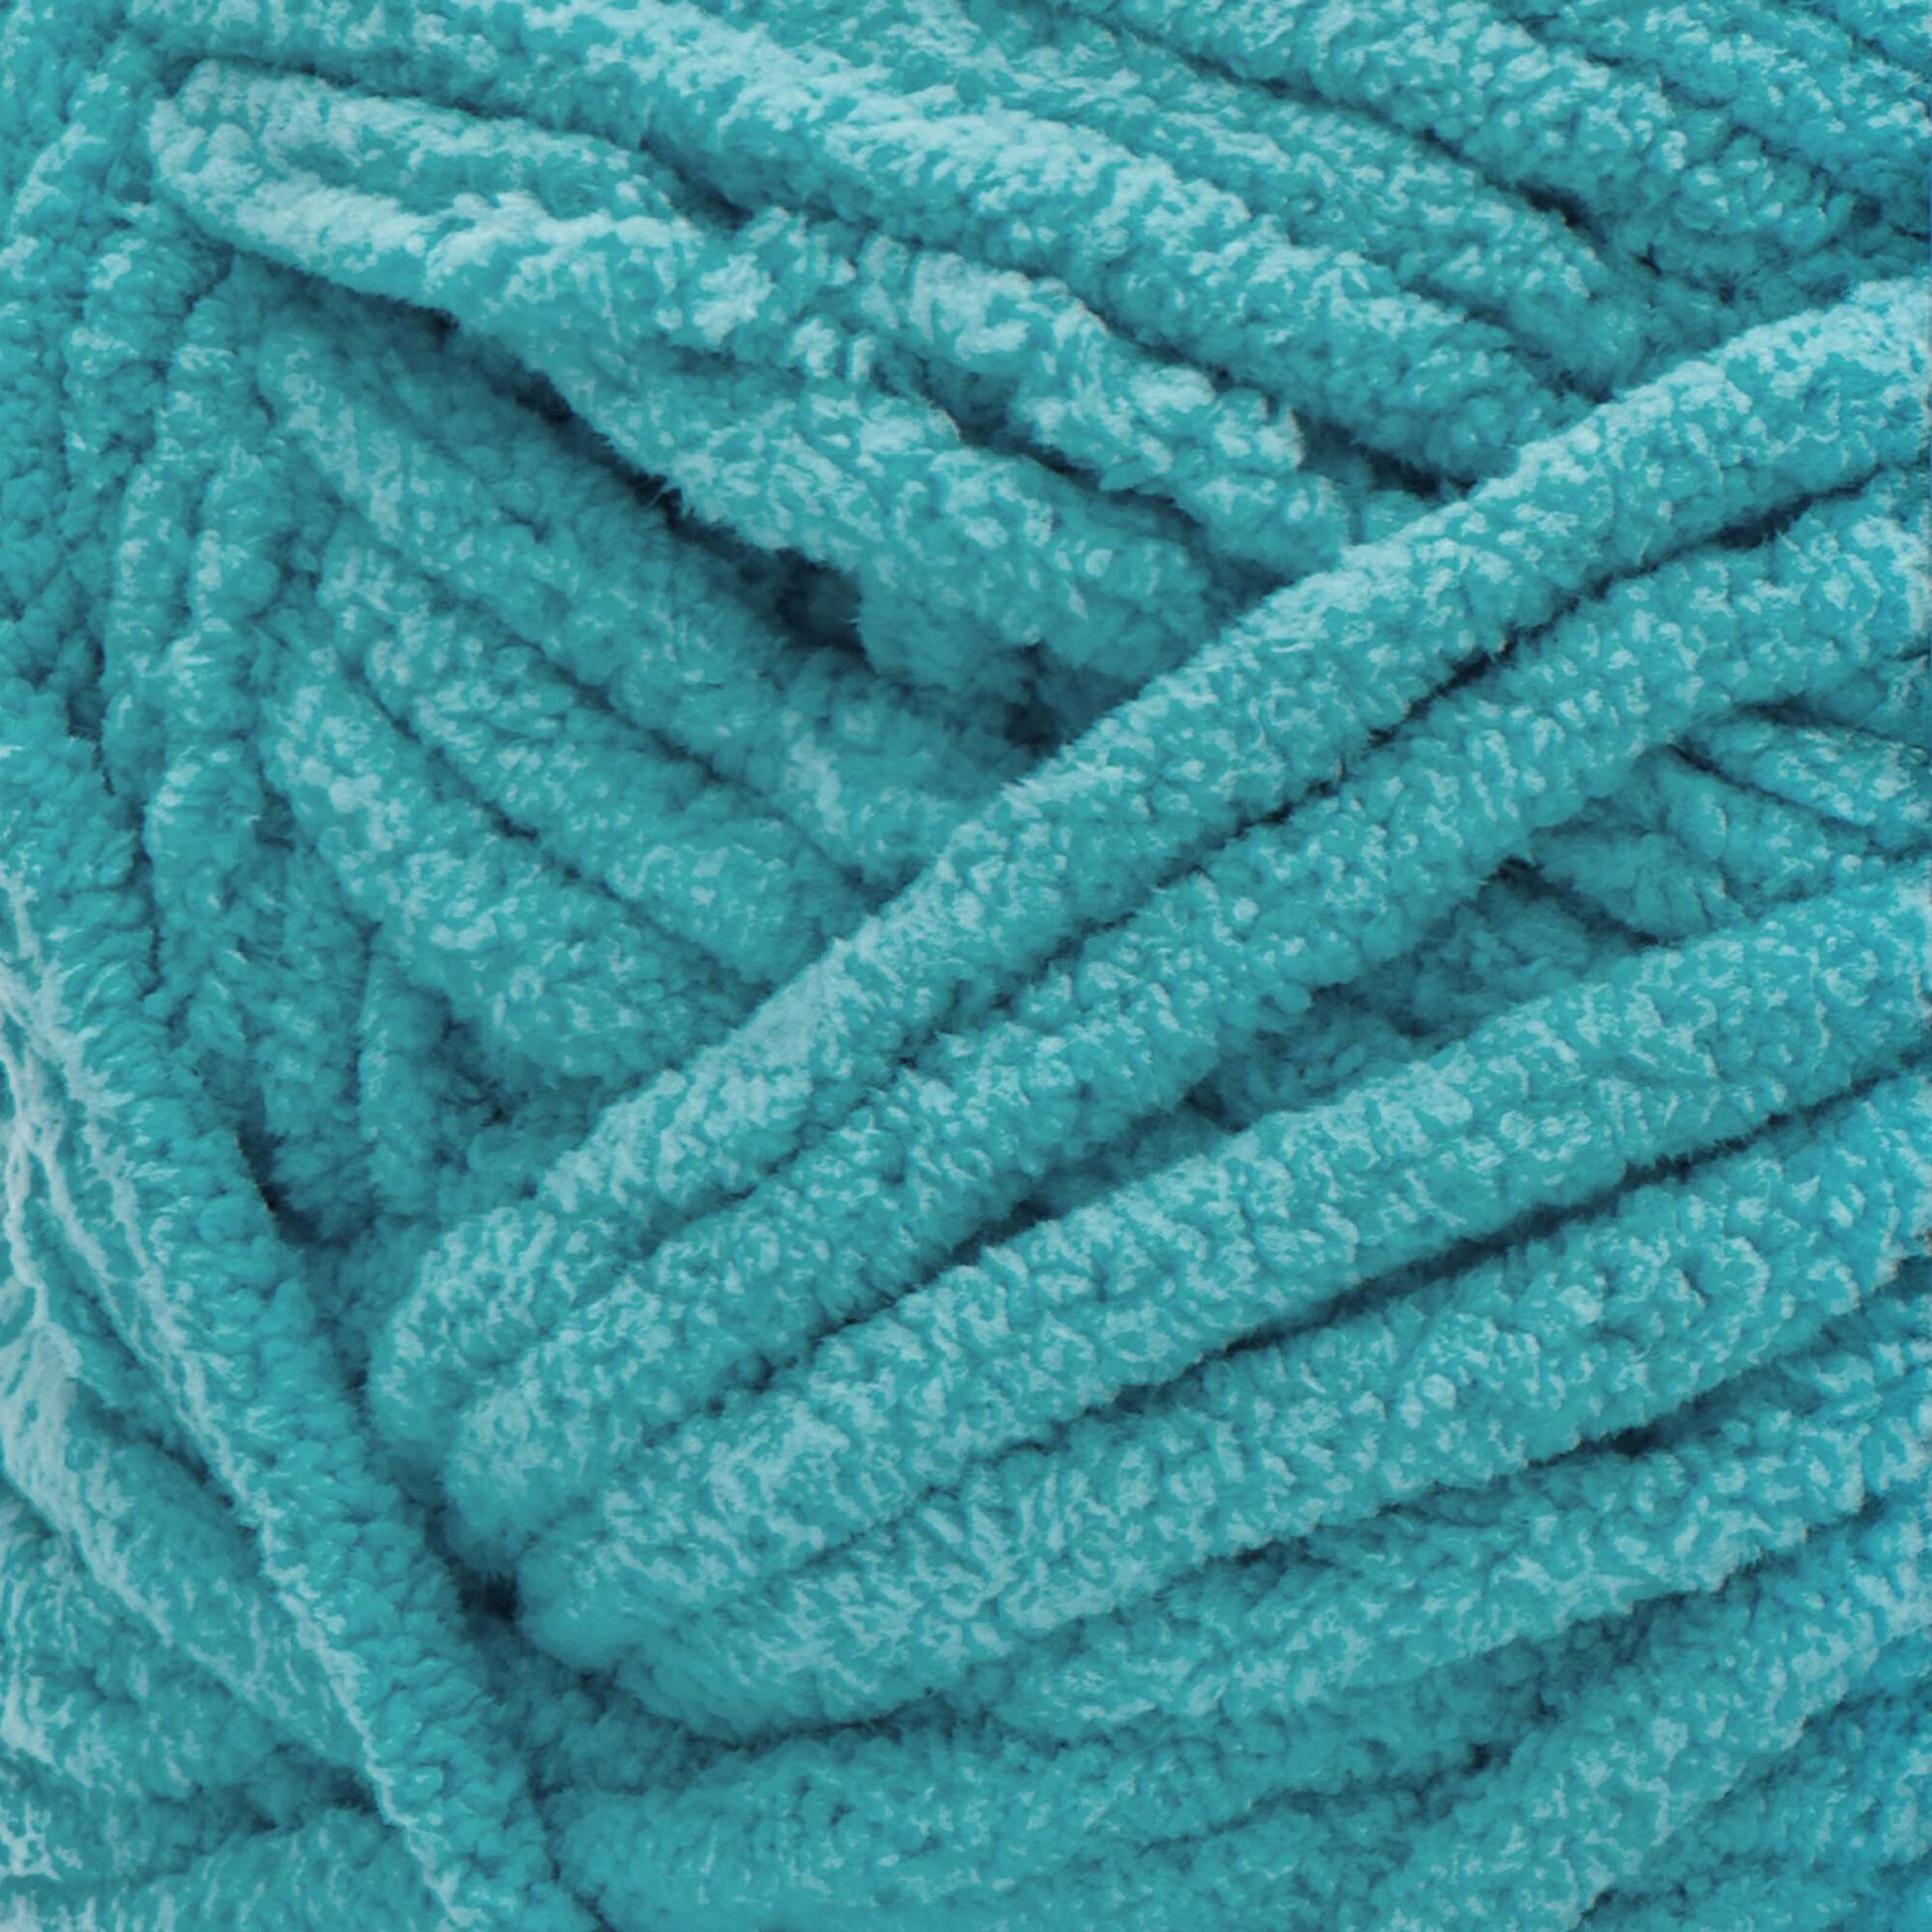 Bernat Baby Blanket Dappled - Misty Jungle Green (15006) - 300g - Wool  Warehouse - Buy Yarn, Wool, Needles & Other Knitting Supplies Online!